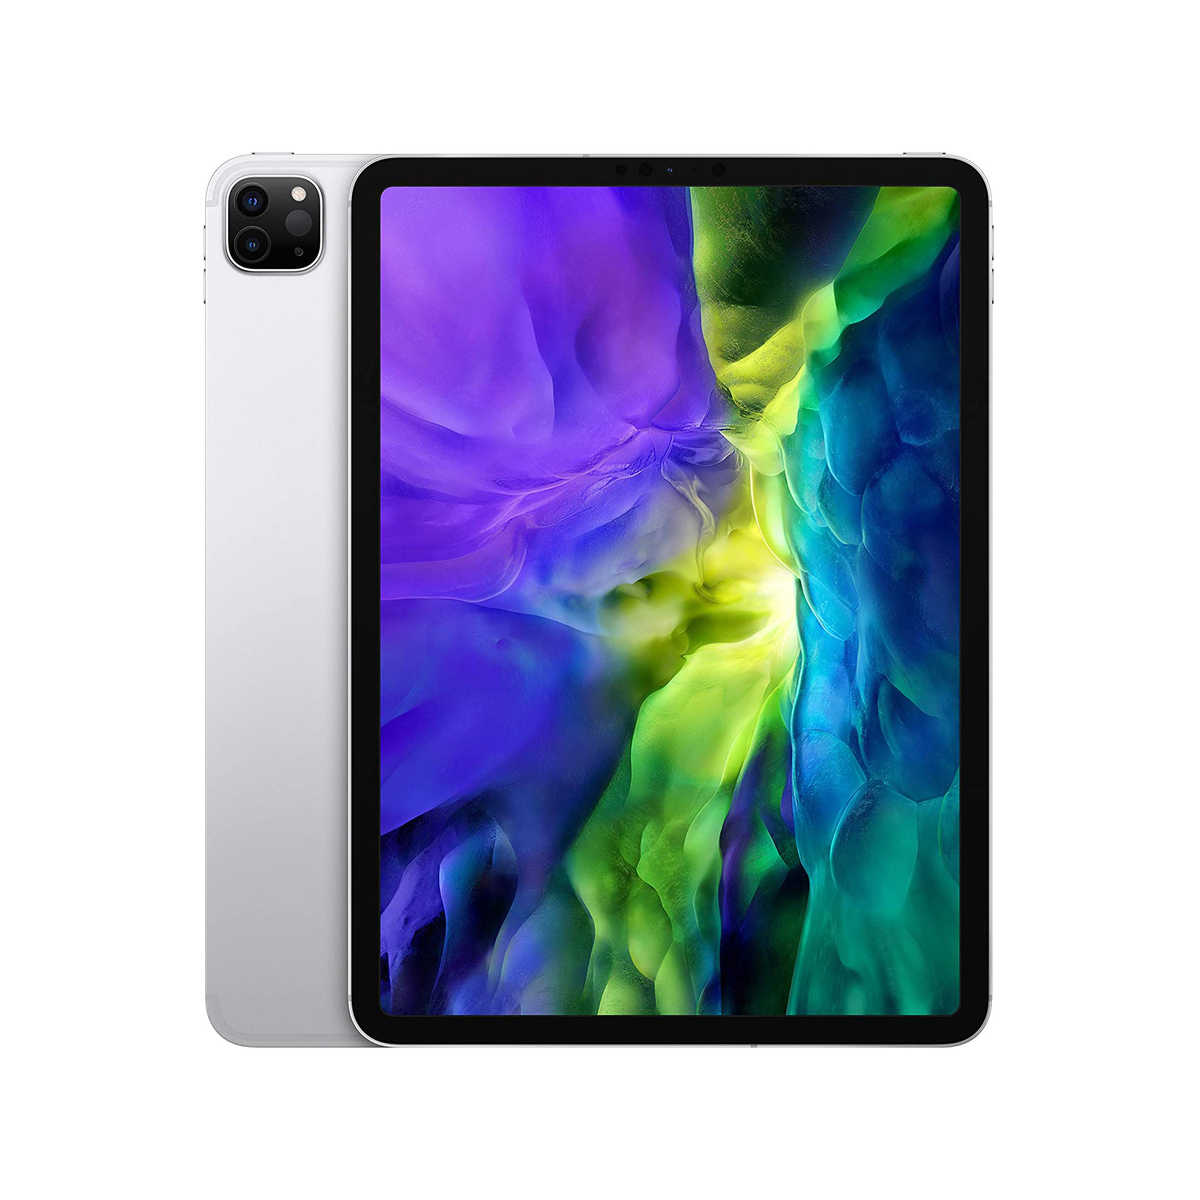 Apple iPad Pro (11-inch, Wi-Fi + Cellular, 1TB) - Silver (2nd Generation)